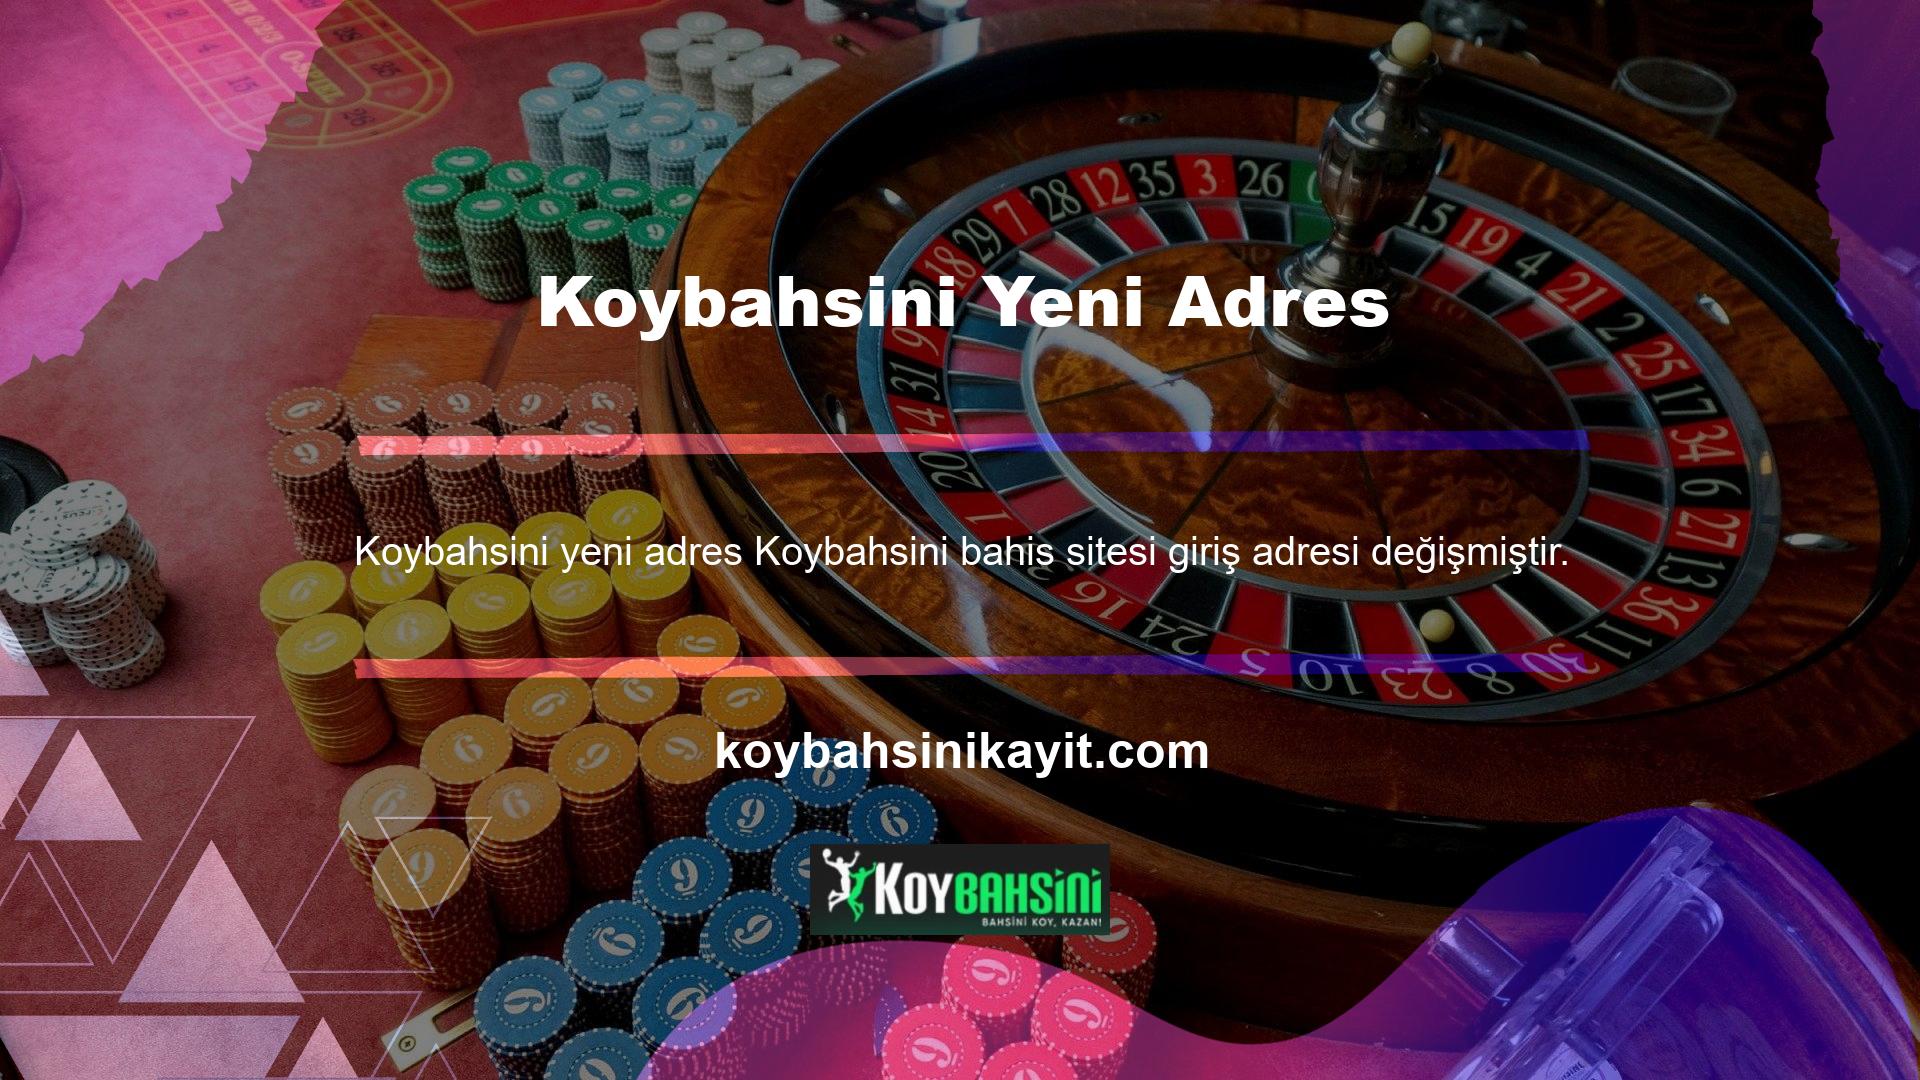 Koybahsini web sitesine Koybahsini